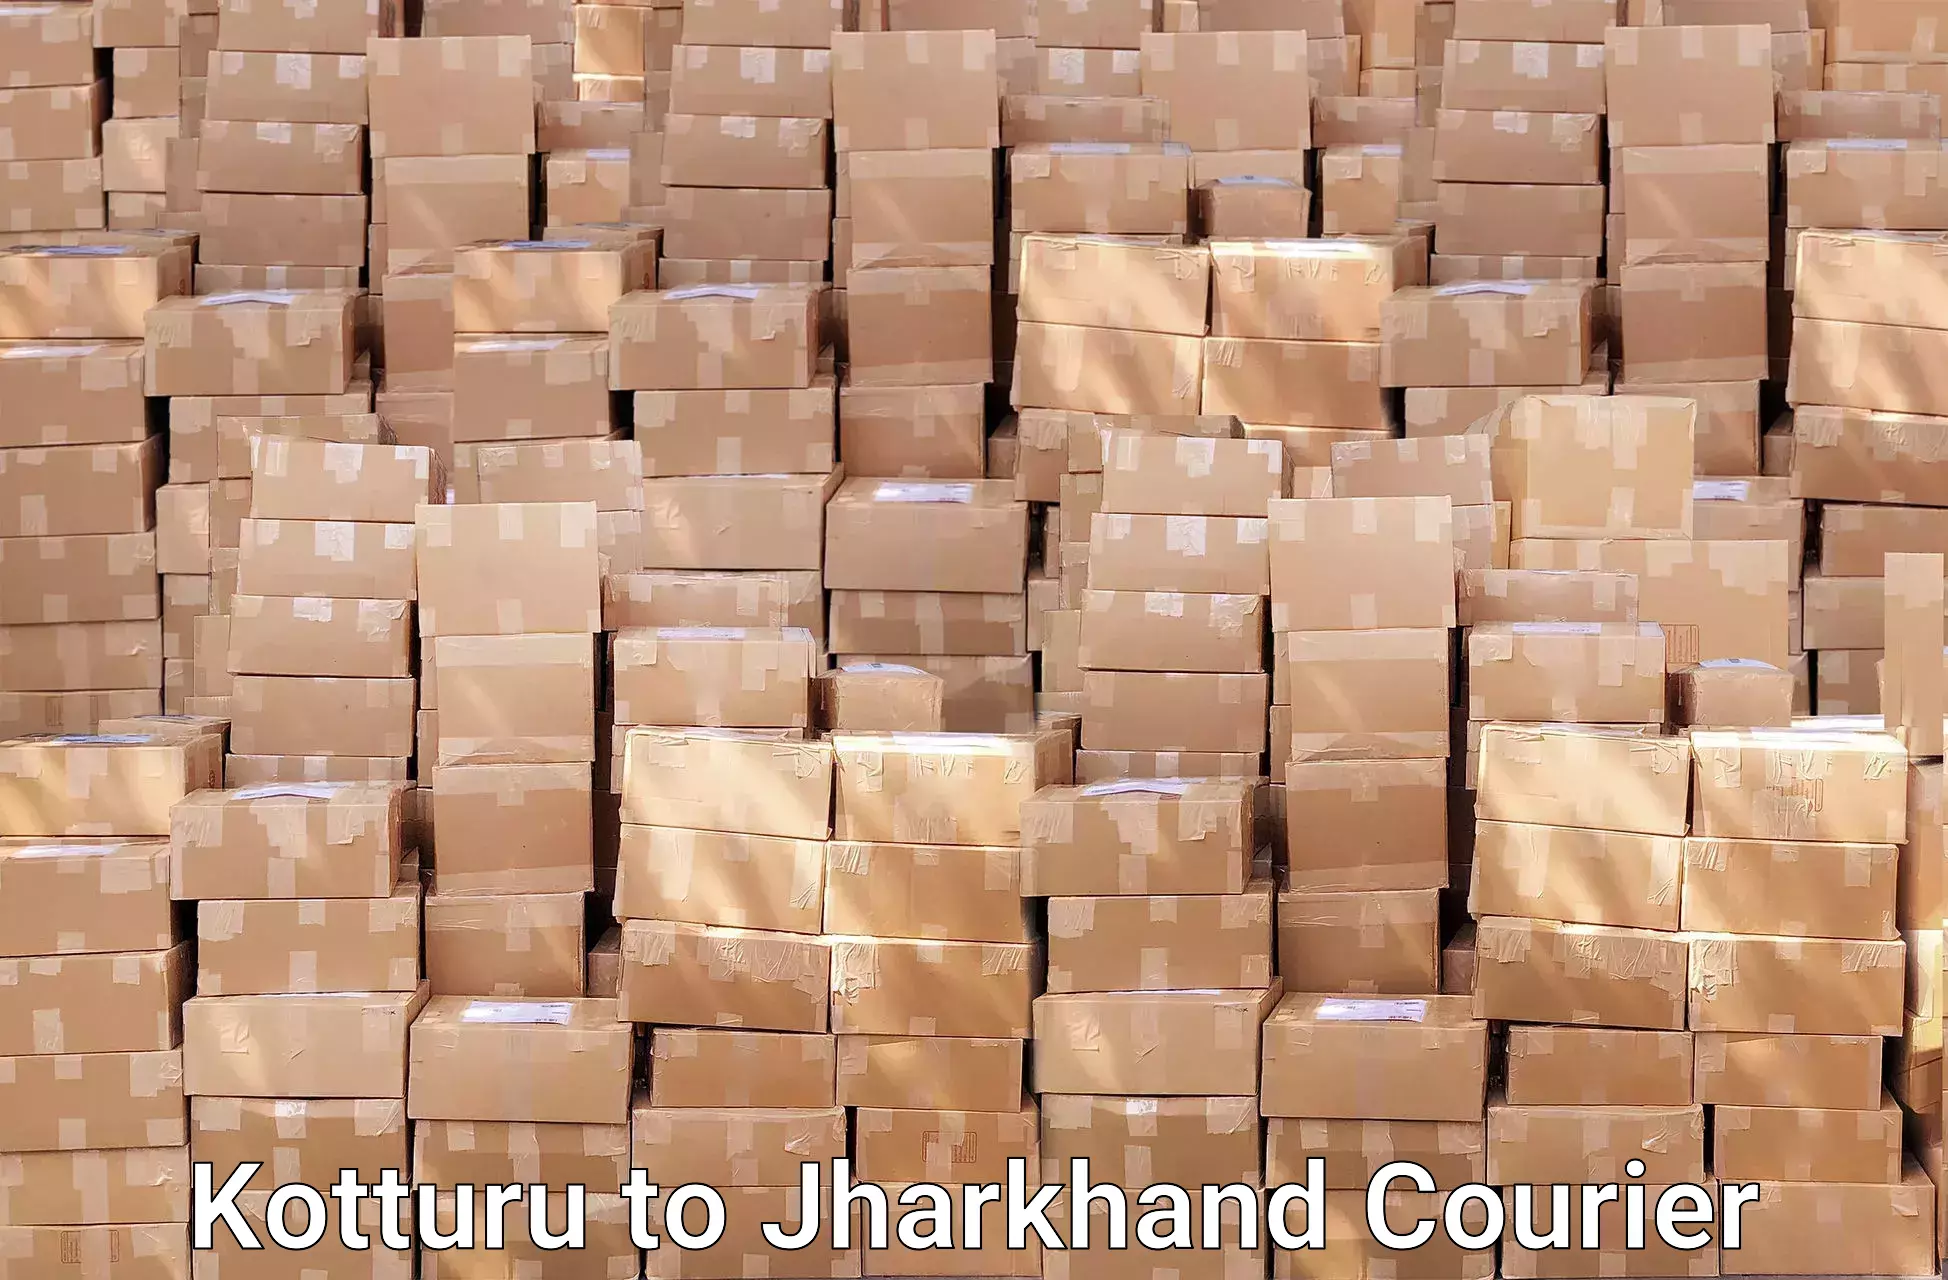 Professional furniture movers in Kotturu to Chandwa